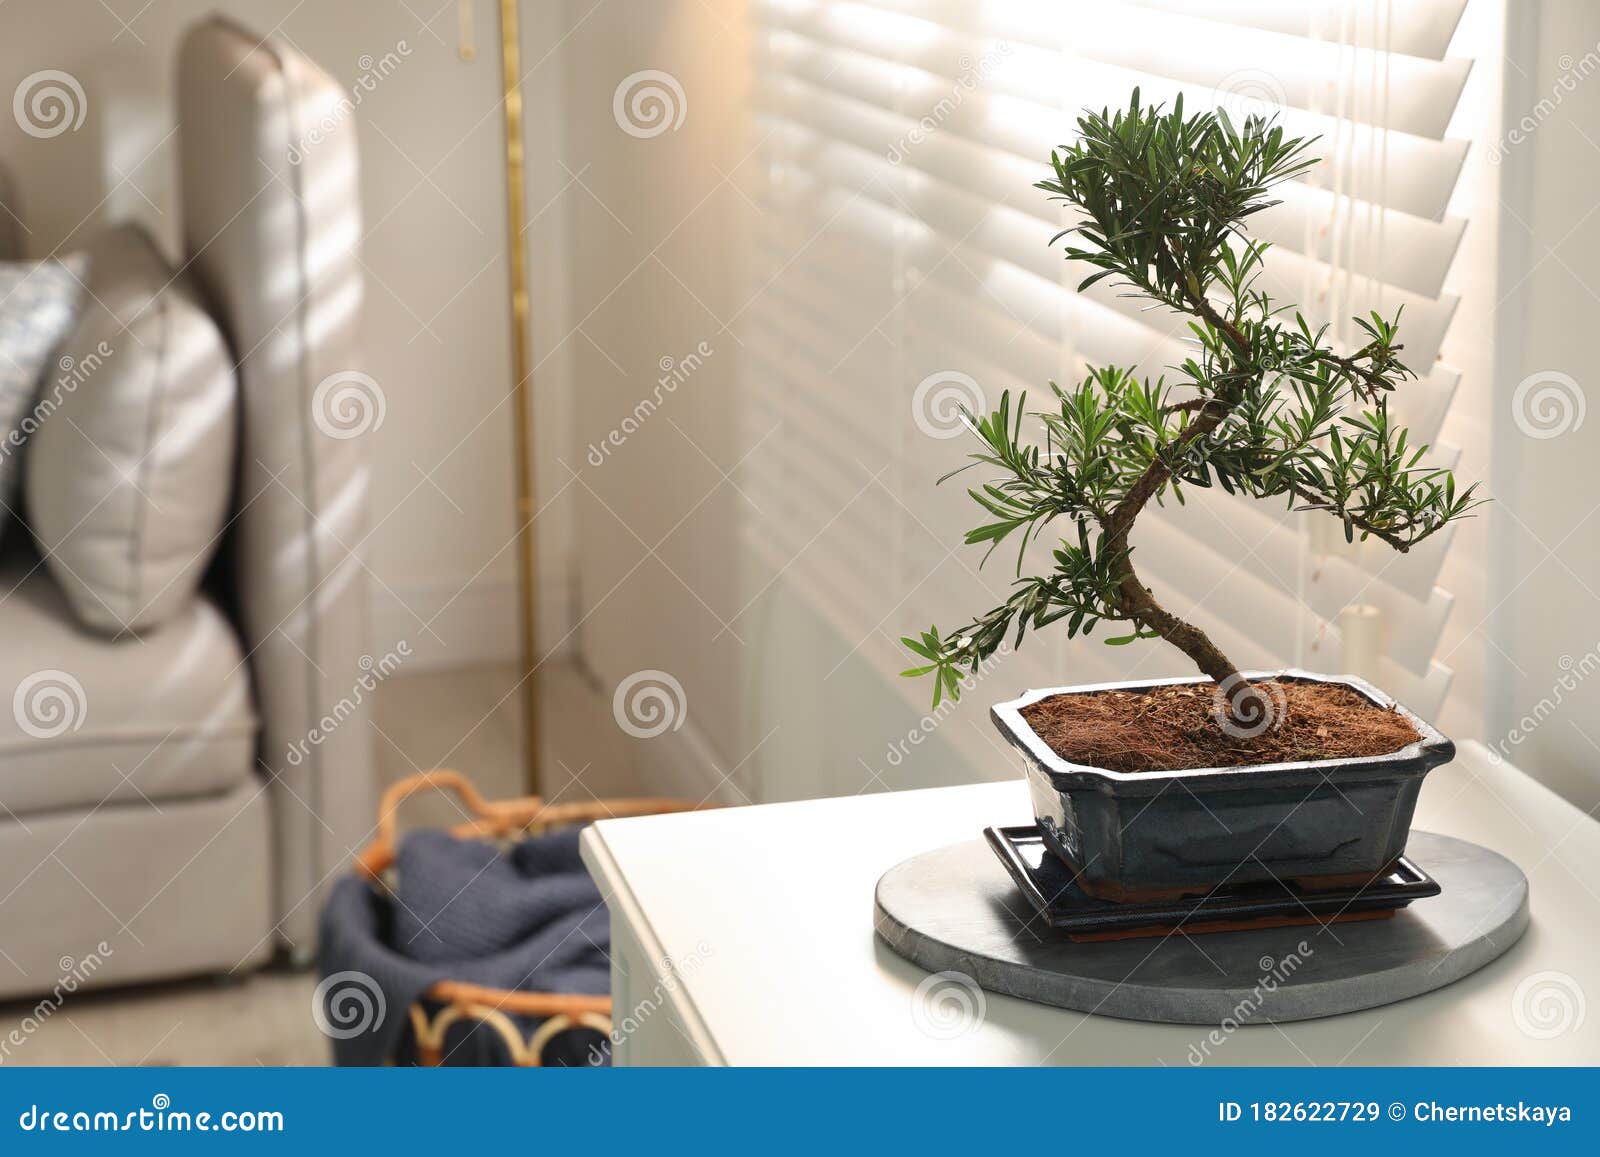 bonsai in living room